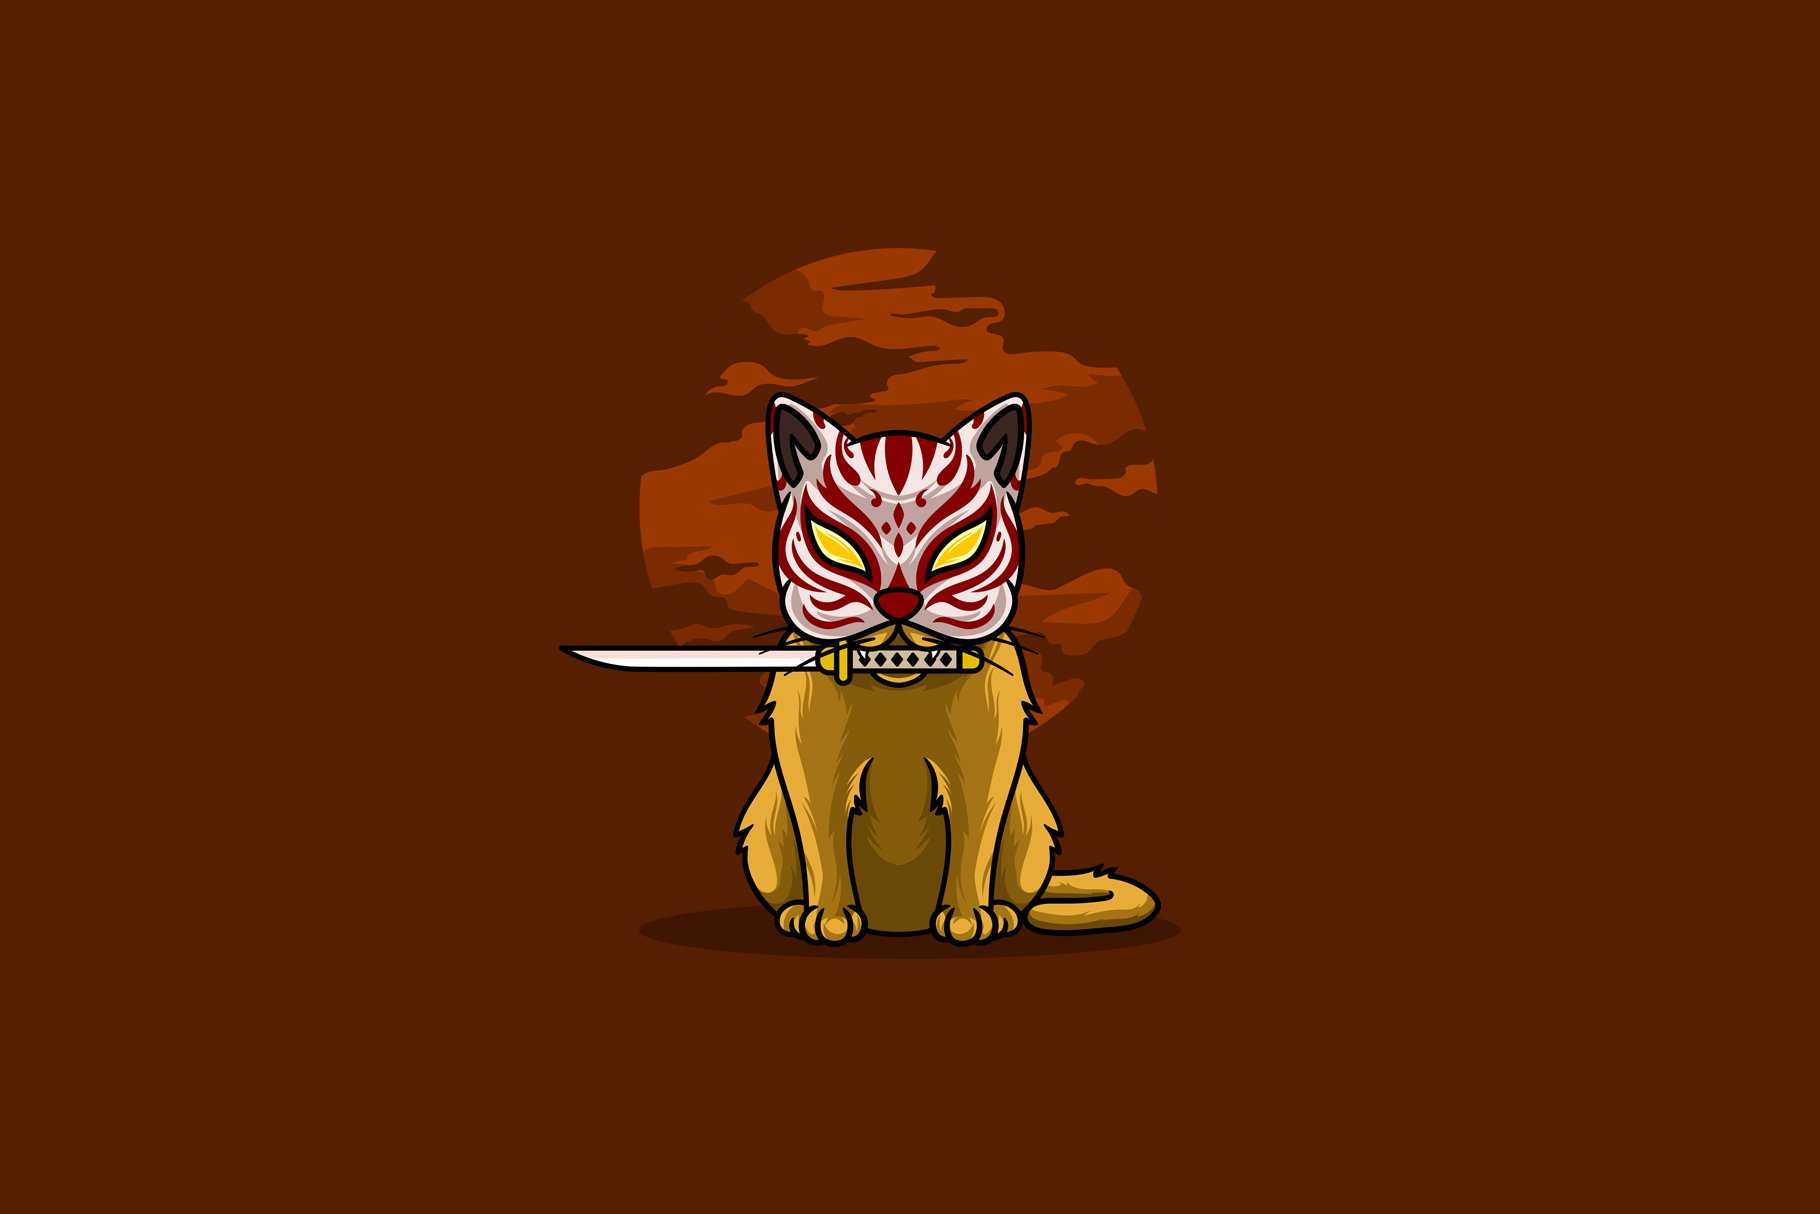 Samurai cat biting sword cover image.